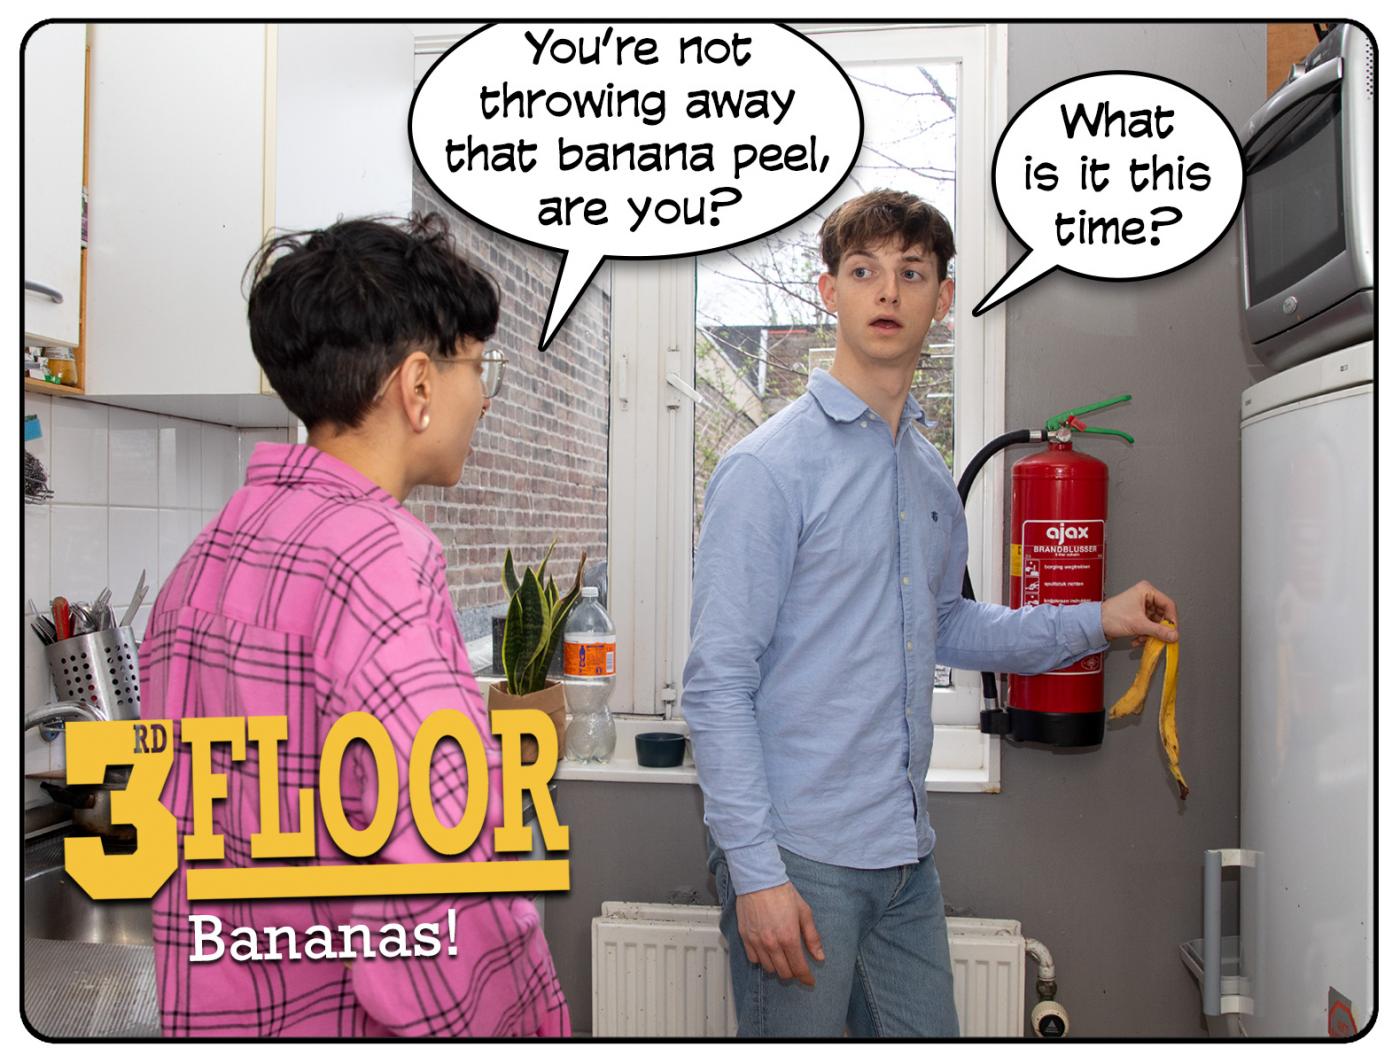 3rd Floor: Bananas!